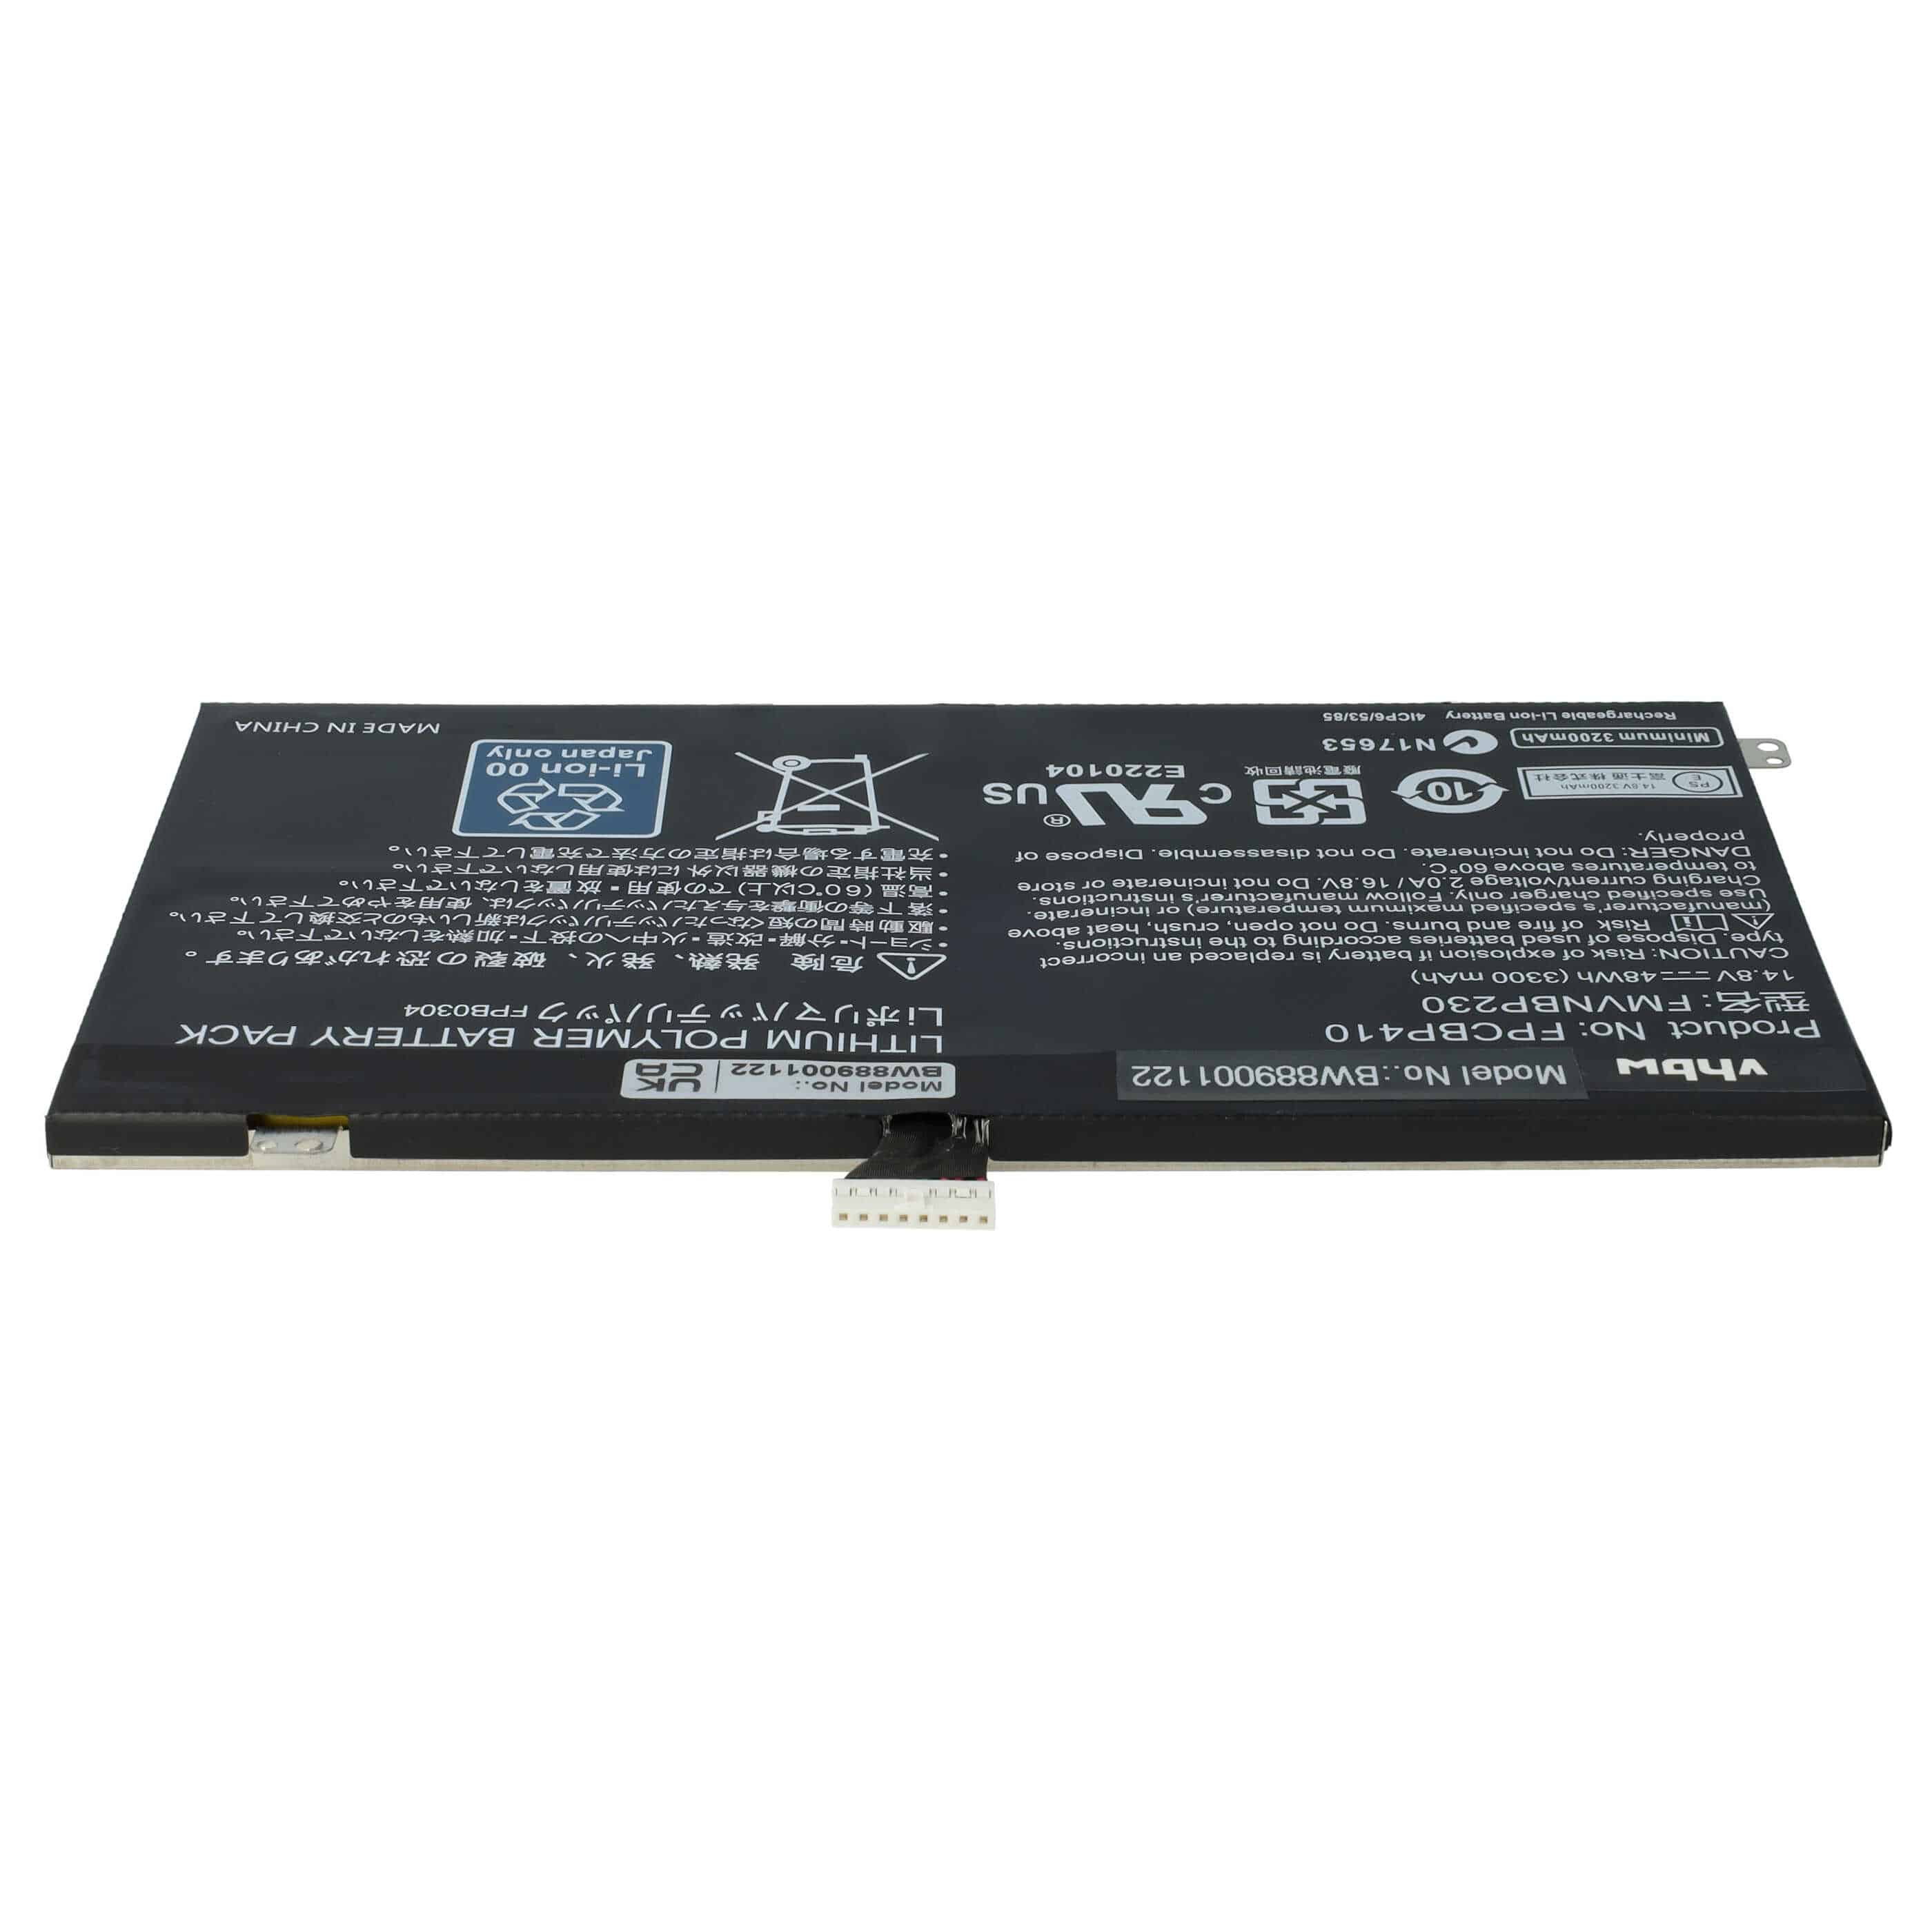 Notebook-Akku als Ersatz für Fujitsu FPCBP410, FMVNBP230, FPB0304 - 3300mAh 14,8V Li-Polymer